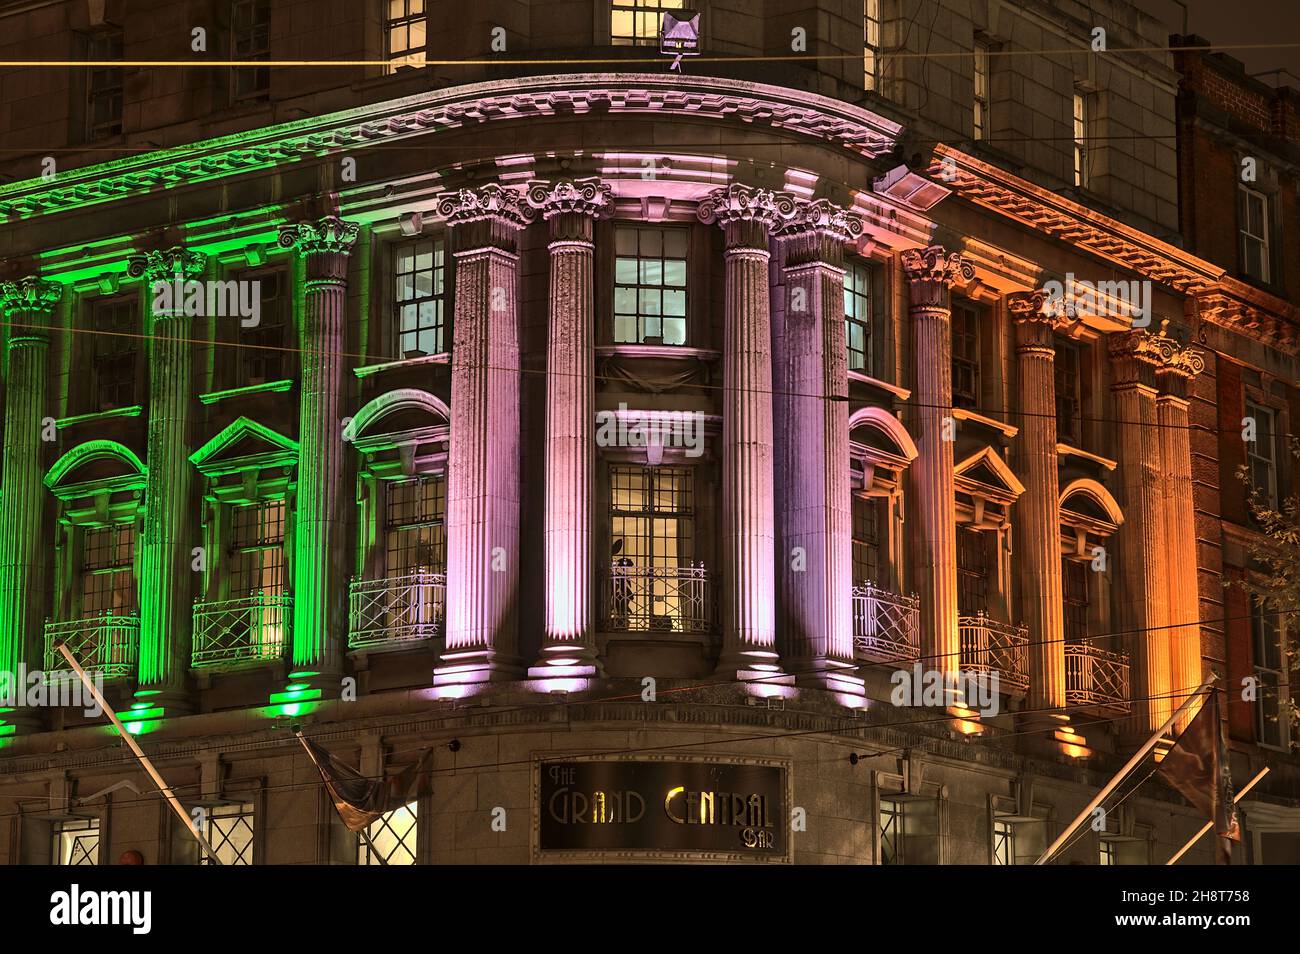 Dublin, Ireland - November 13, 2021: Beautiful evening view of projection lights decorations imitating Irish flag on facade of the Grand Central Bar Stock Photo